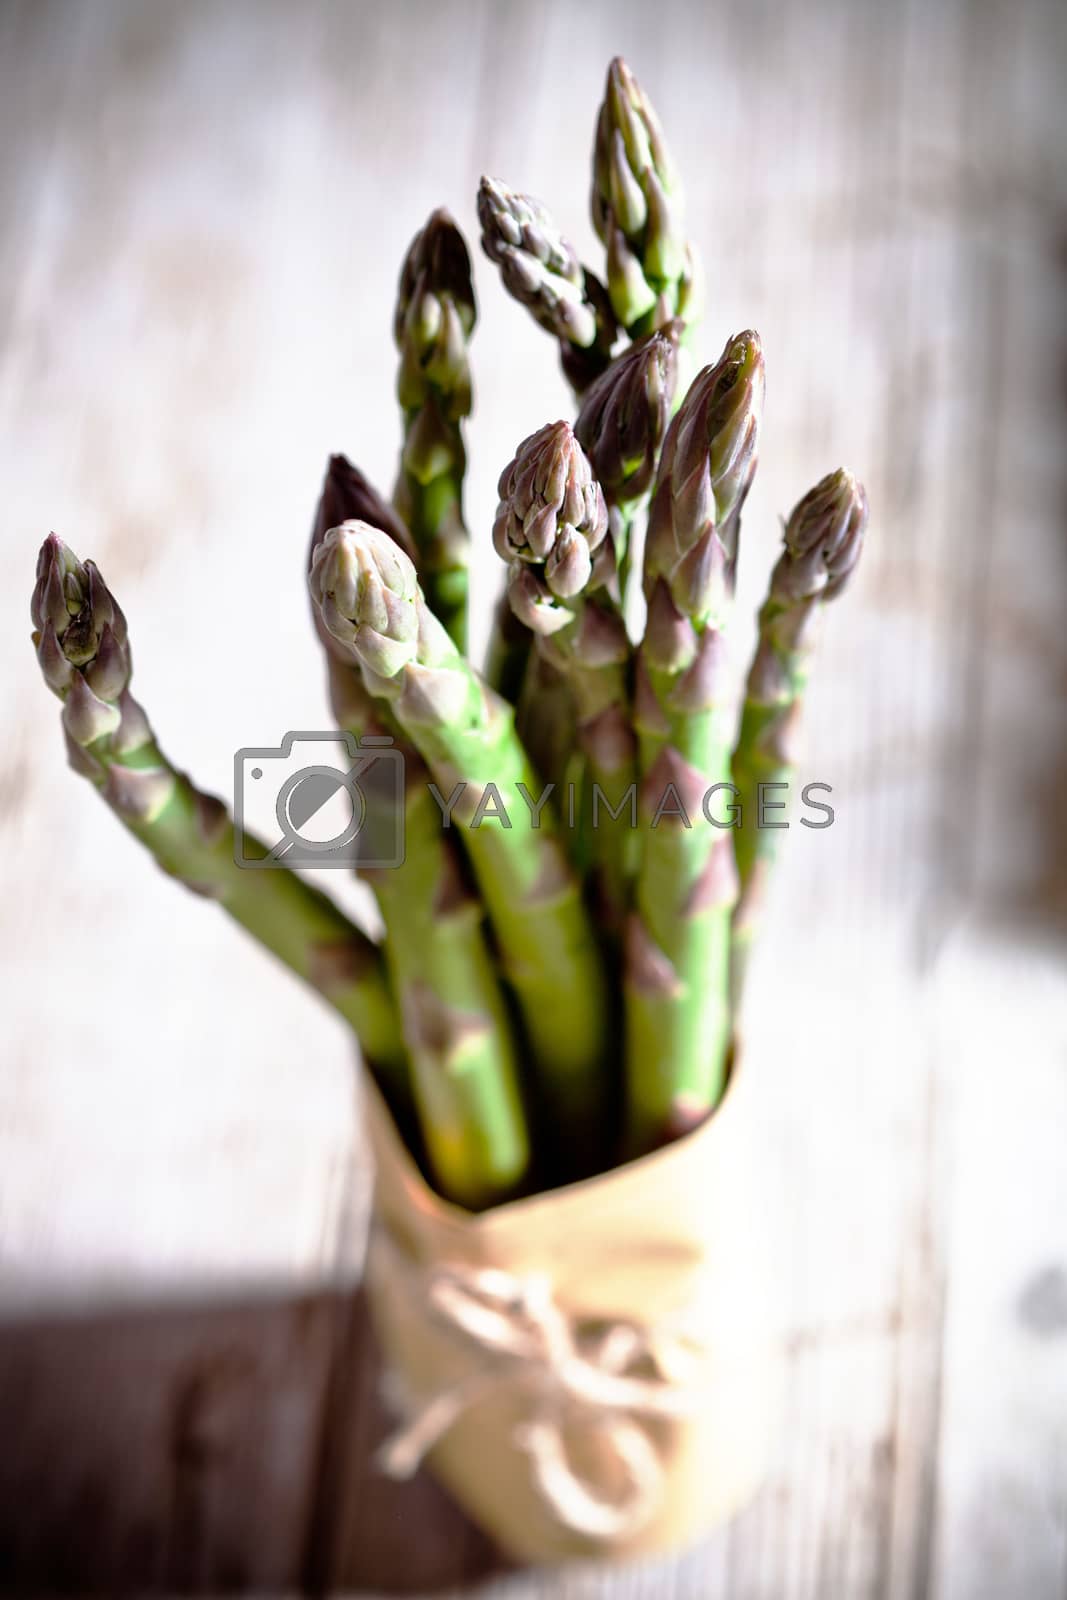 Royalty free image of fresh asparagus by marylooo